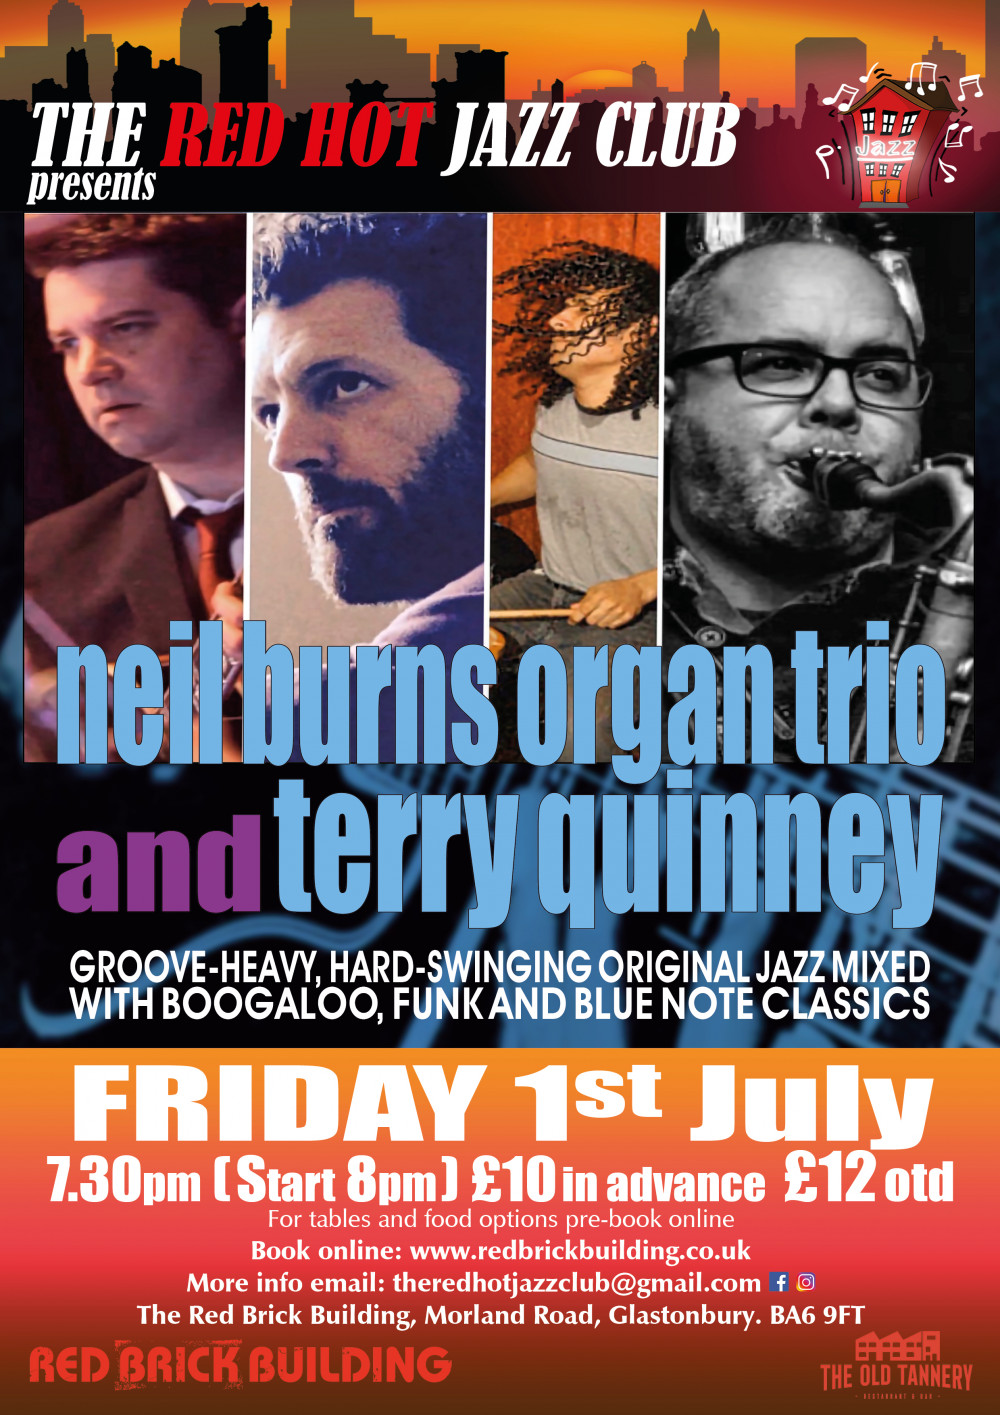 The Red Hot Jazz Club Presents... The Neil Burns Organ Trio & Terry Quinney  | Music | News | Glastonbury Nub News